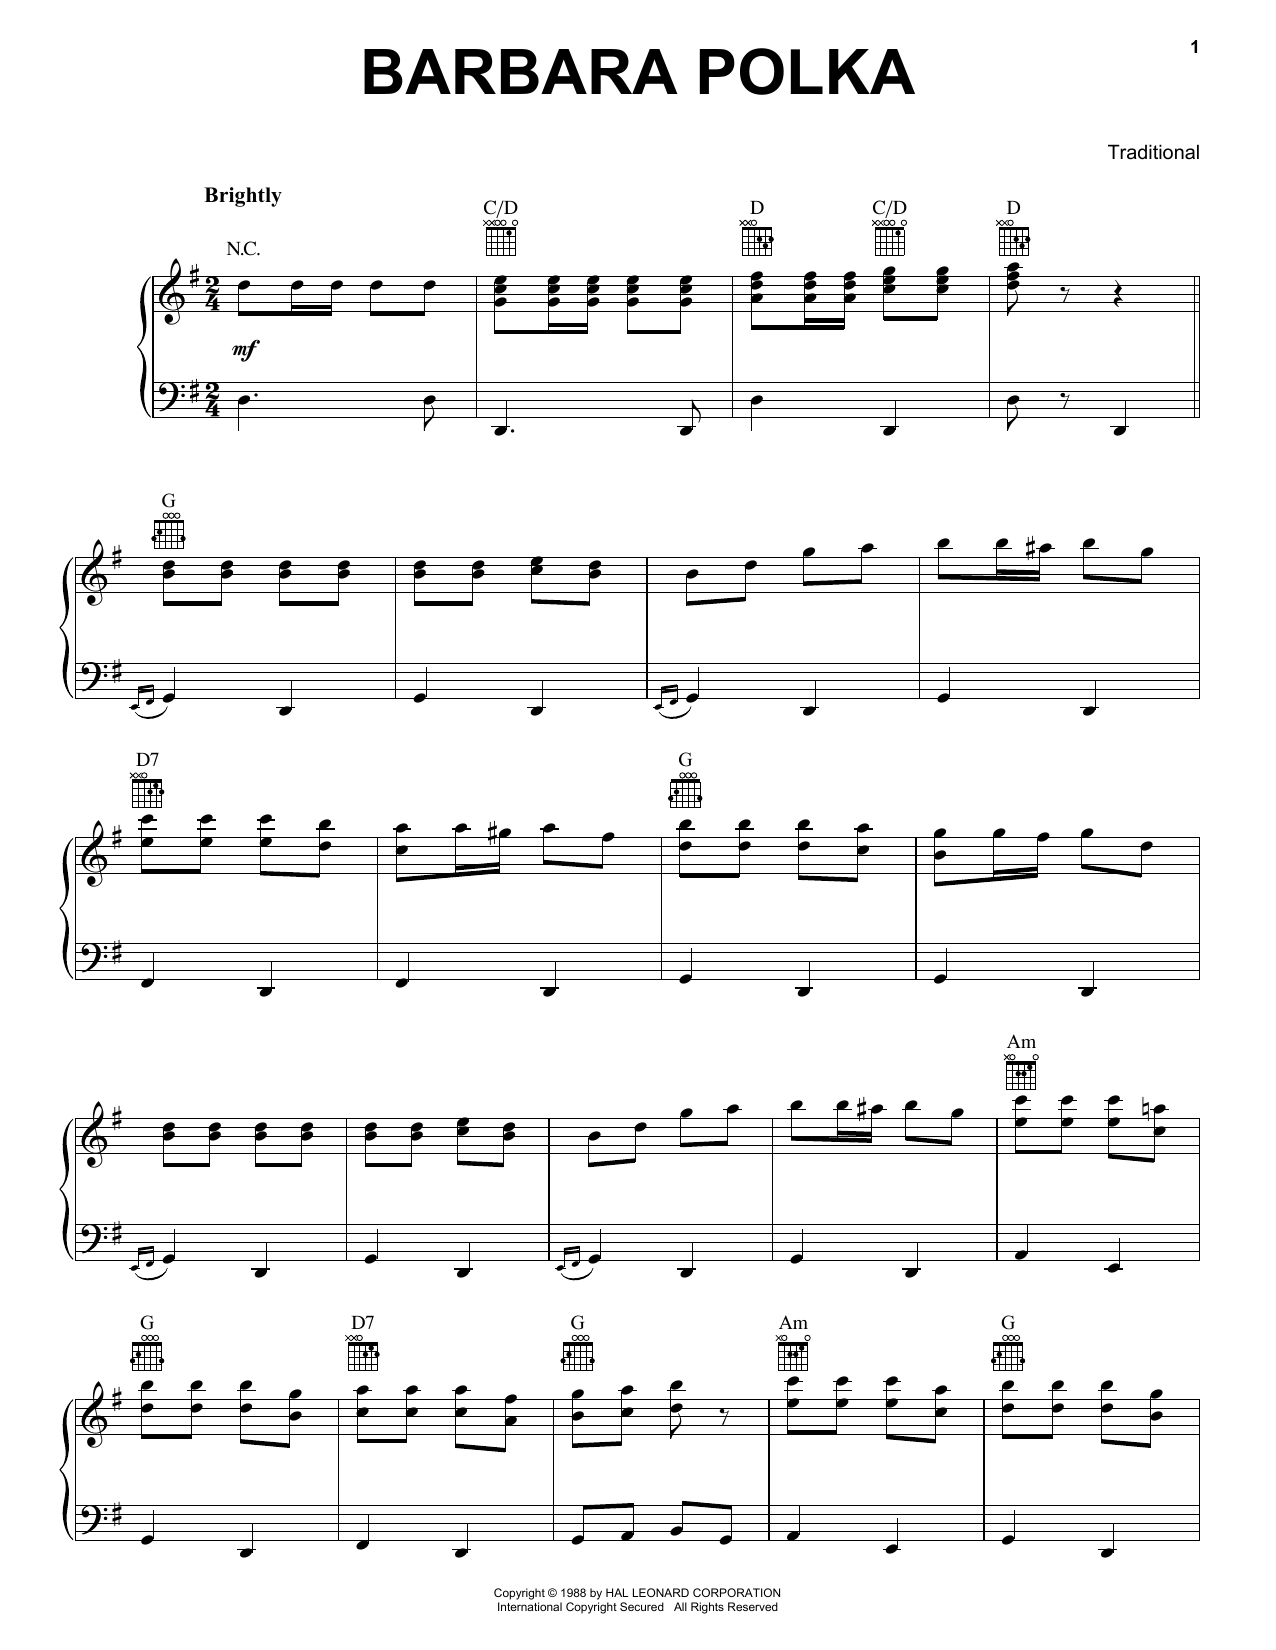 Traditional Barbara Polka Sheet Music Notes & Chords for Piano, Vocal & Guitar (Right-Hand Melody) - Download or Print PDF